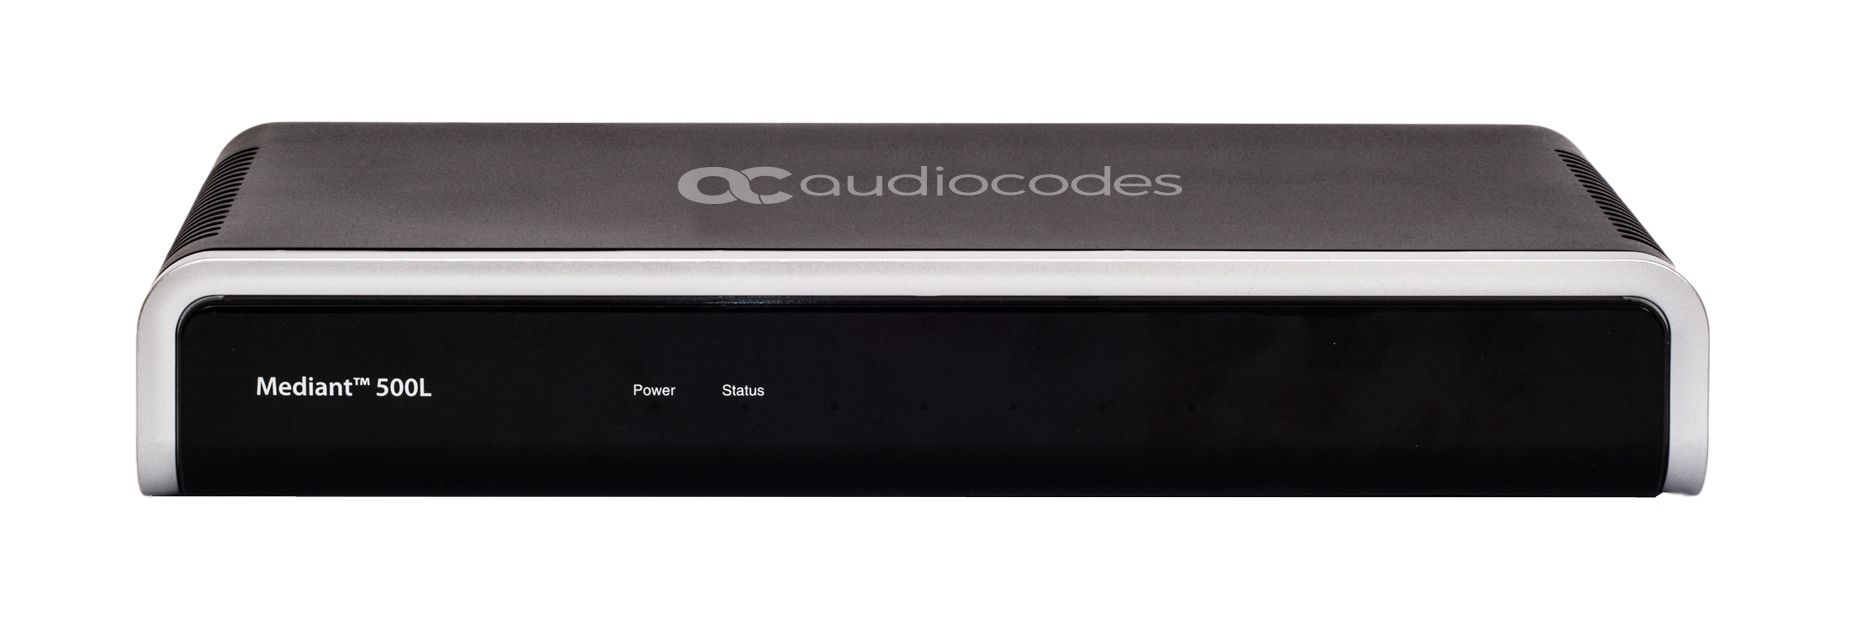 AudioCodes Mediant 500L Hybrid Enterprise Session Border Controller and Gateway with 4 FXO interfaces M500L-V-4O photo